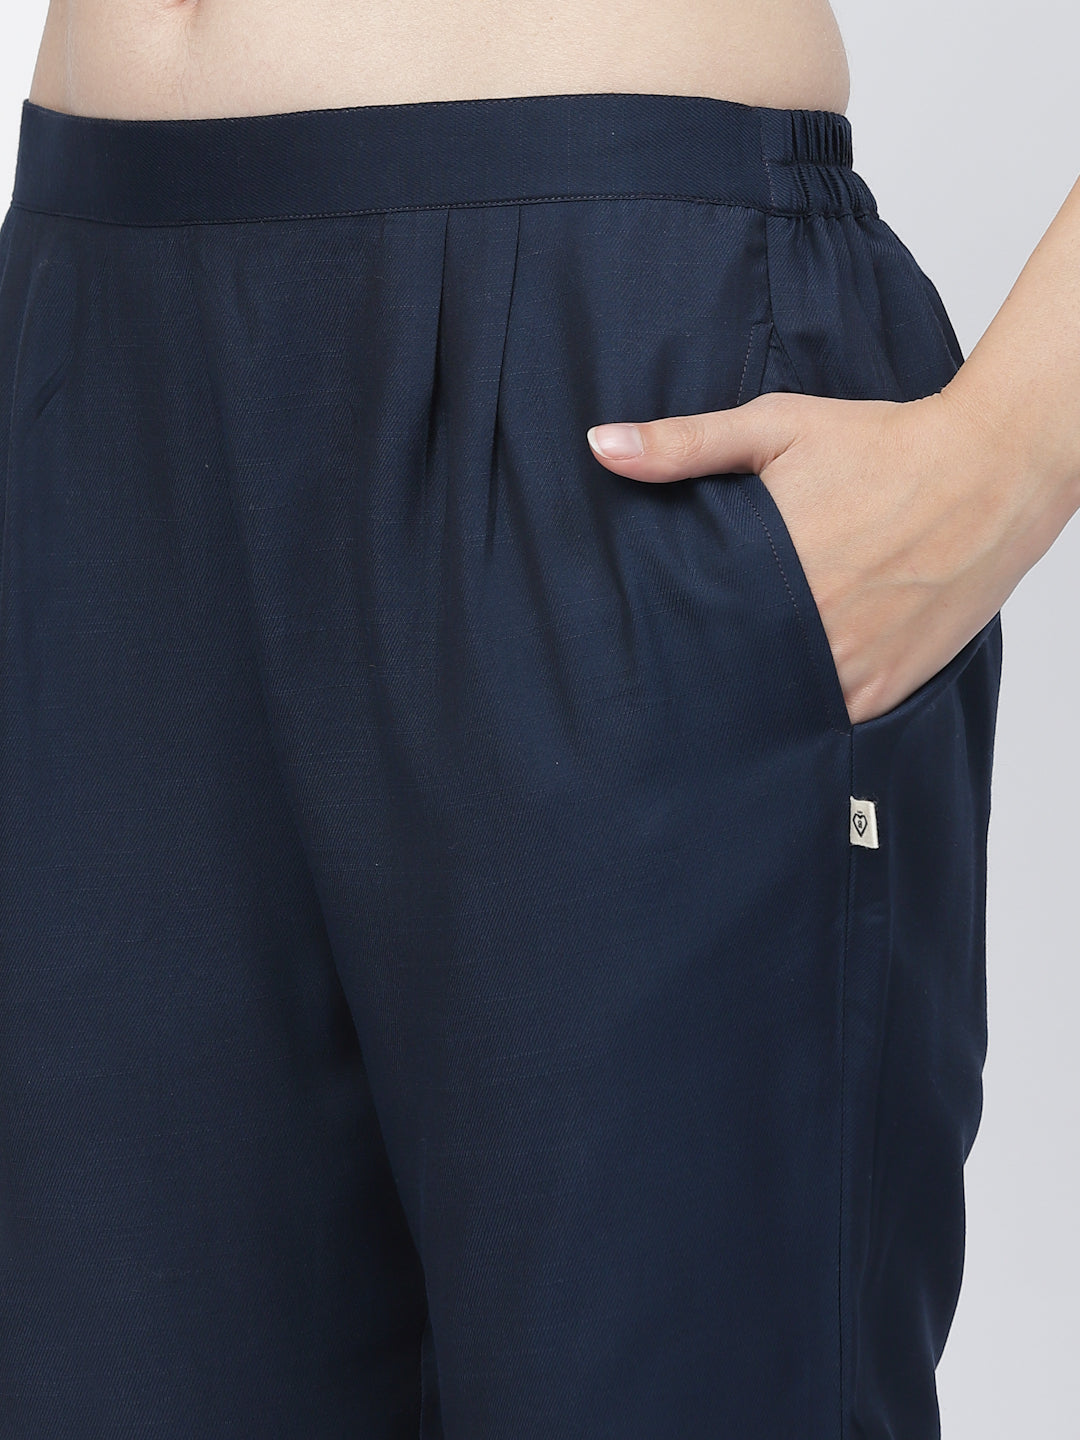 Embroidered Dark Blue Grey Viscose Silk Kurta Pant Set with Gathers - ARH1617